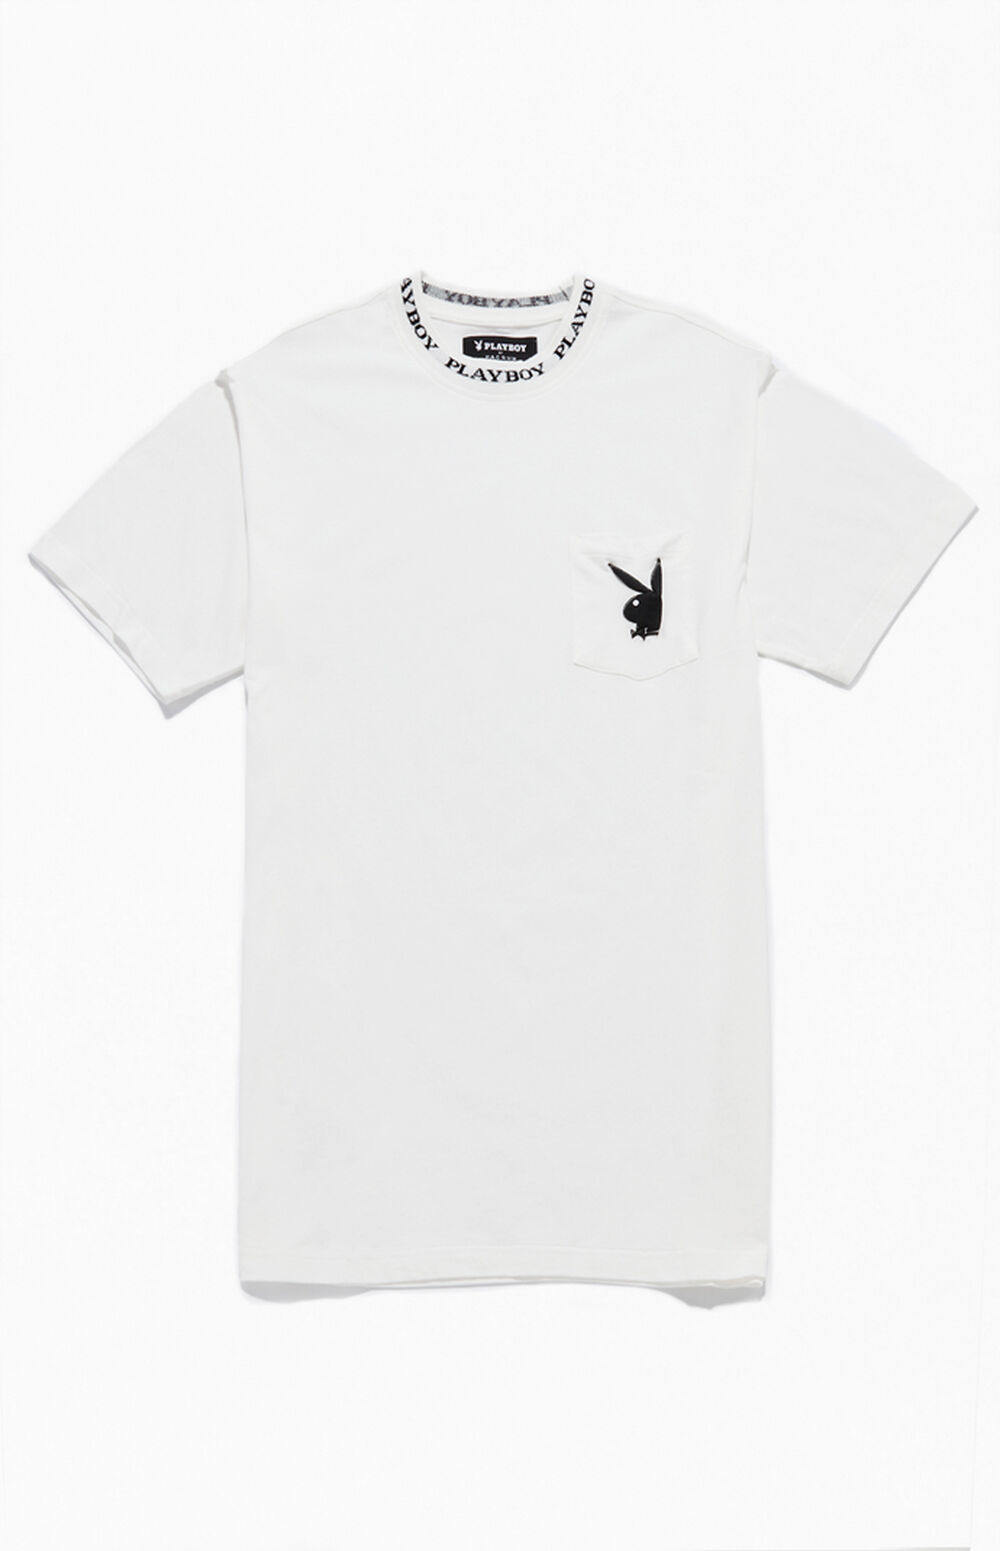 Playboy By PacSun Collar Logo T-Shirt | PacSun